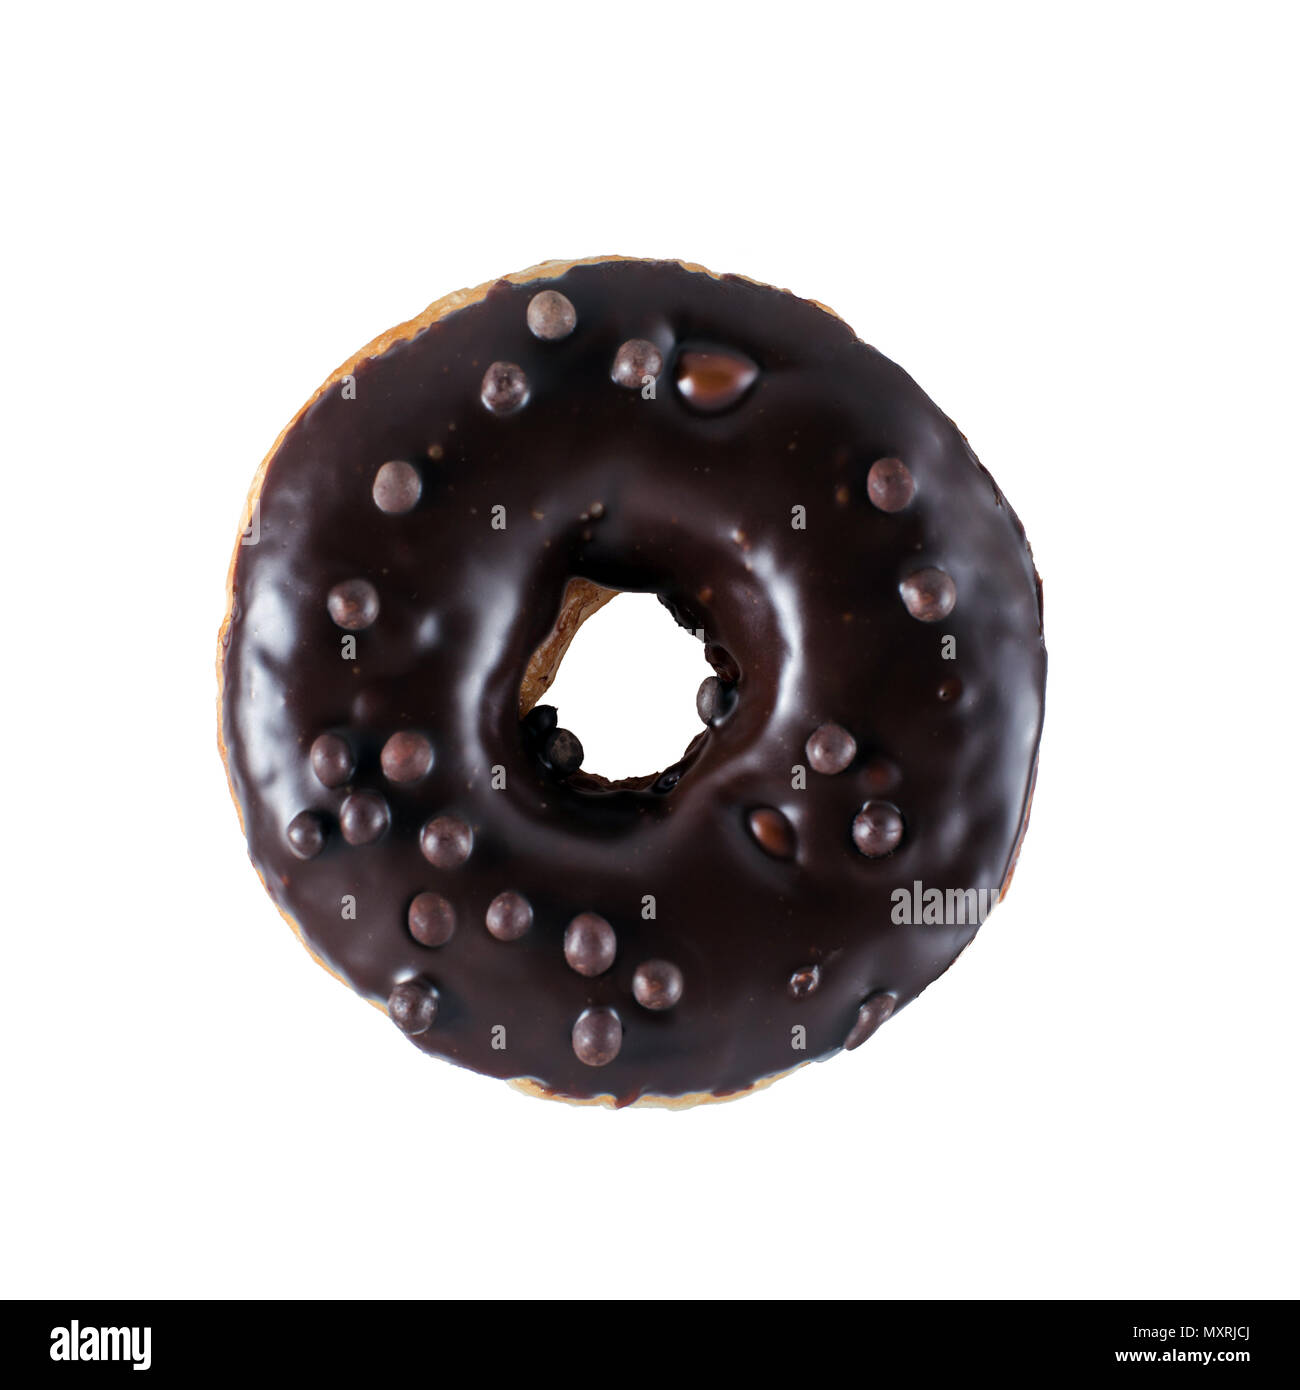 Single chocolate glazed donut with chocolate chips Stock Photo